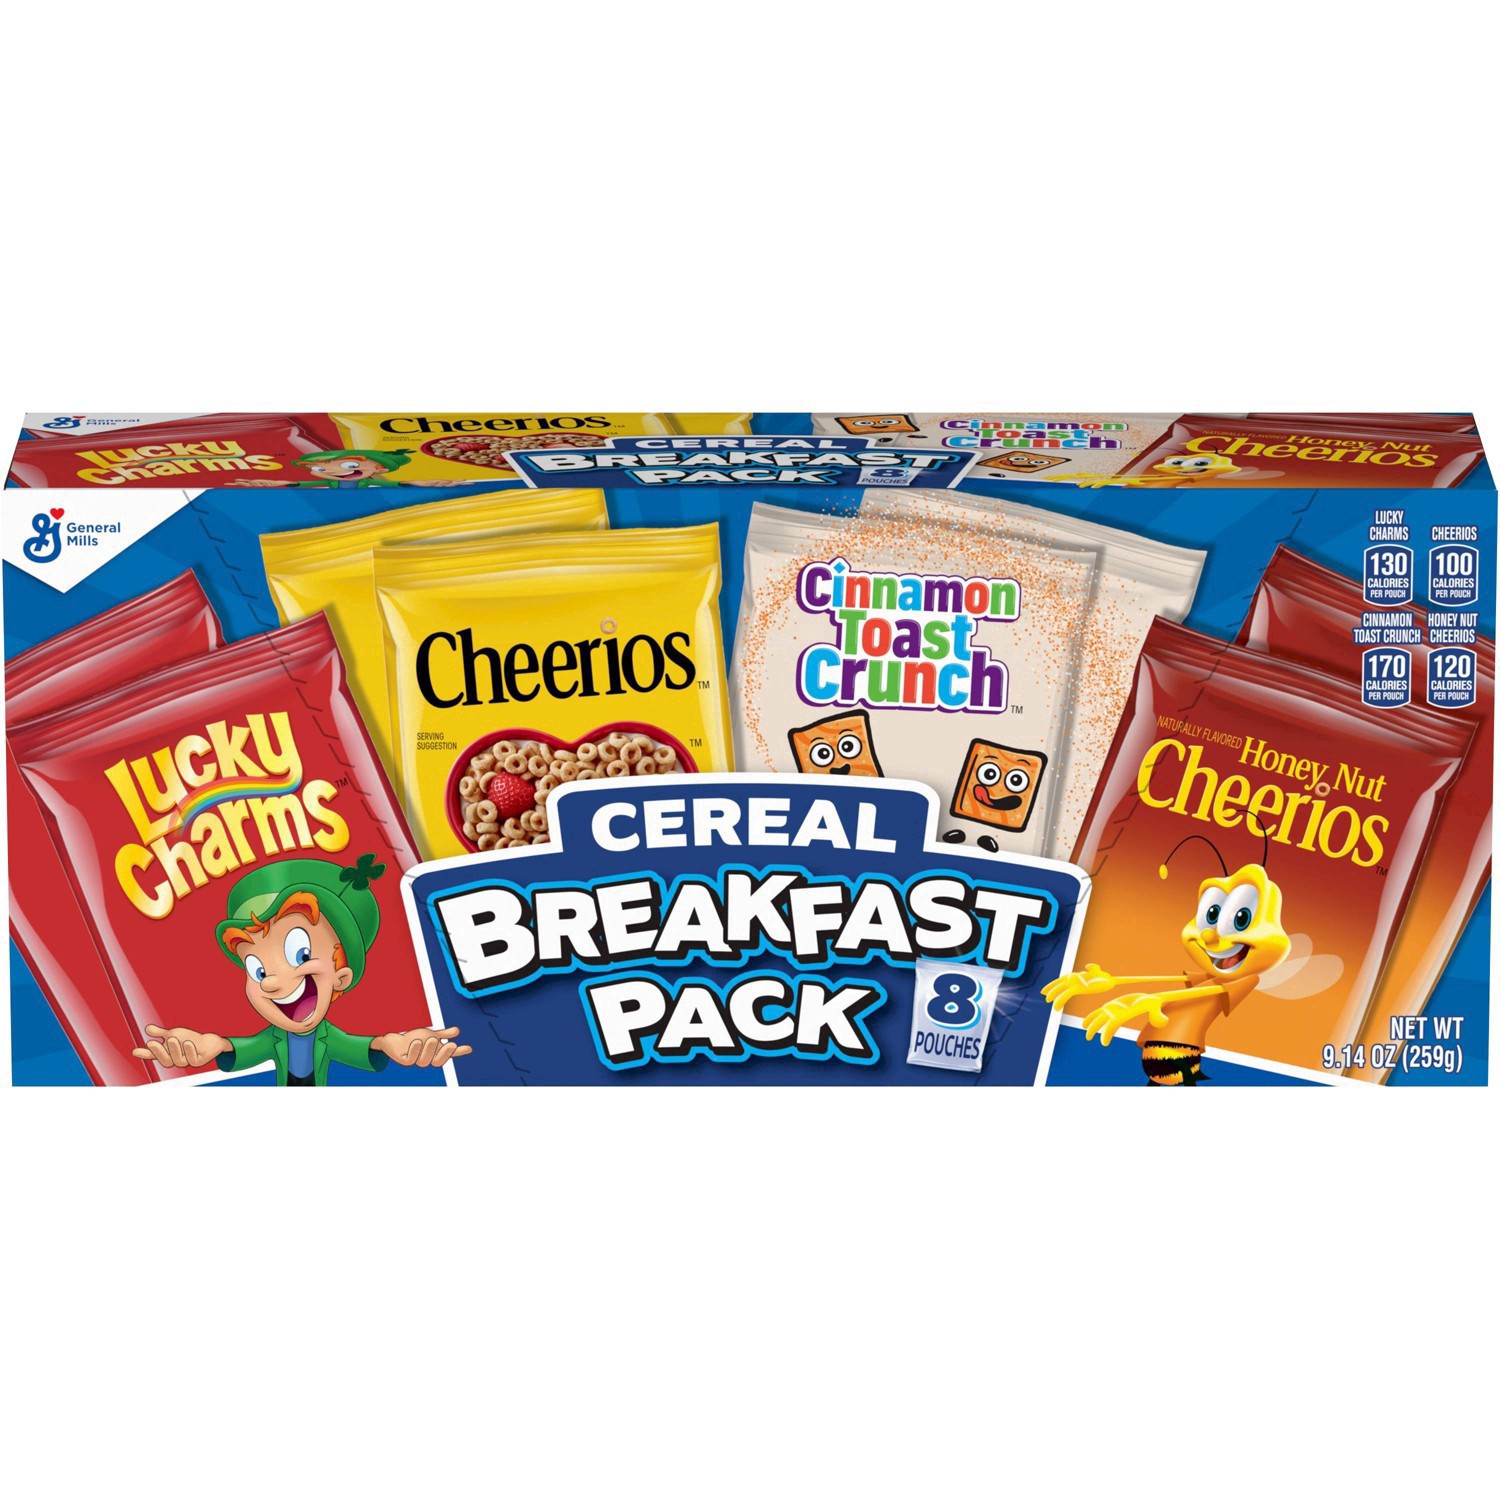 slide 86 of 141, General Mills Breakfast Pack Cereal, 8 ct